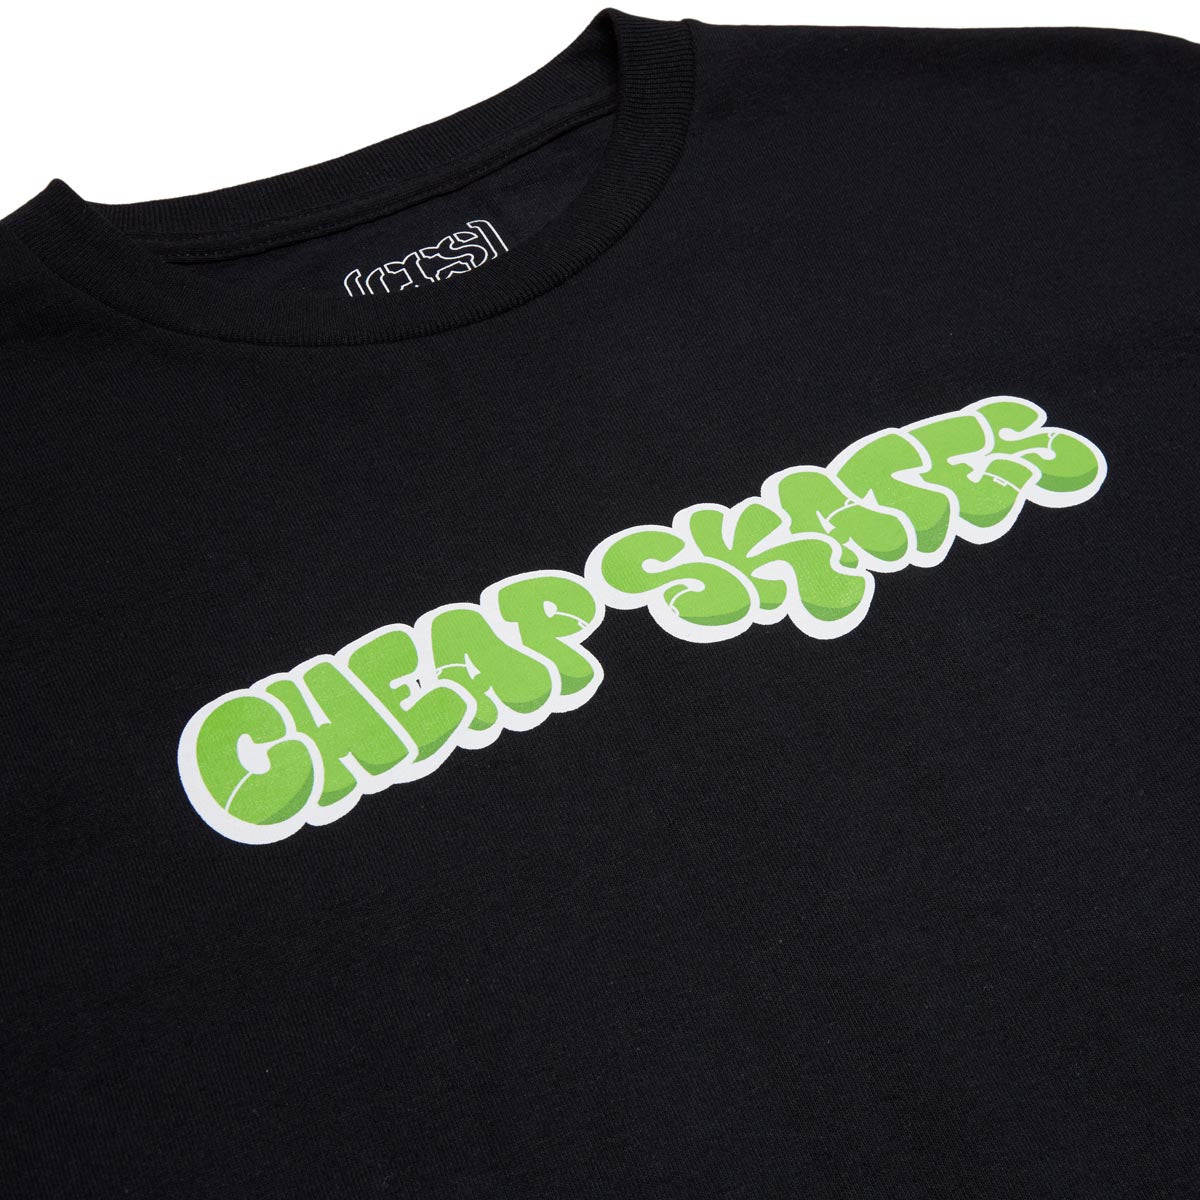 CCS Cheap Skates Tag T-Shirt - Black/Green/White image 2